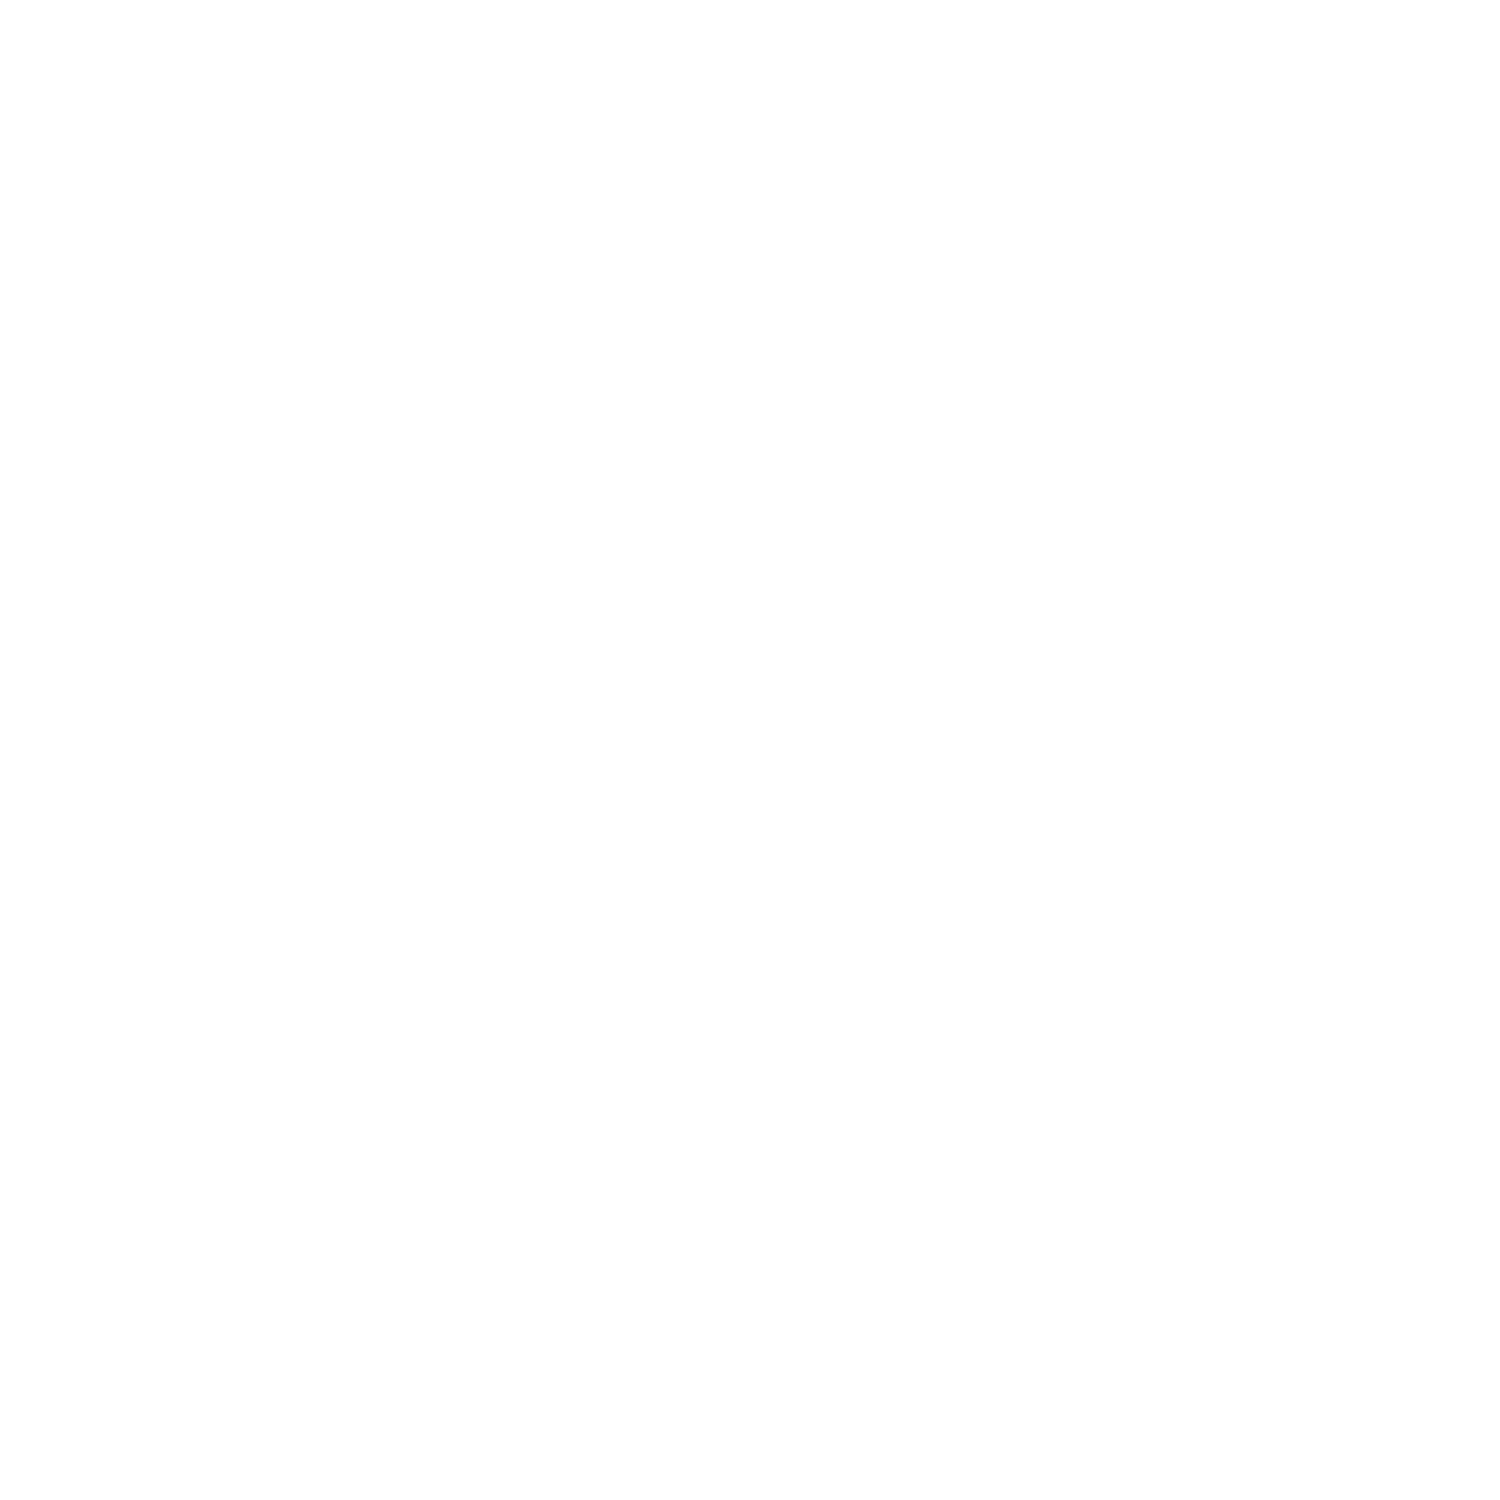 Catherine de Meur Interiors